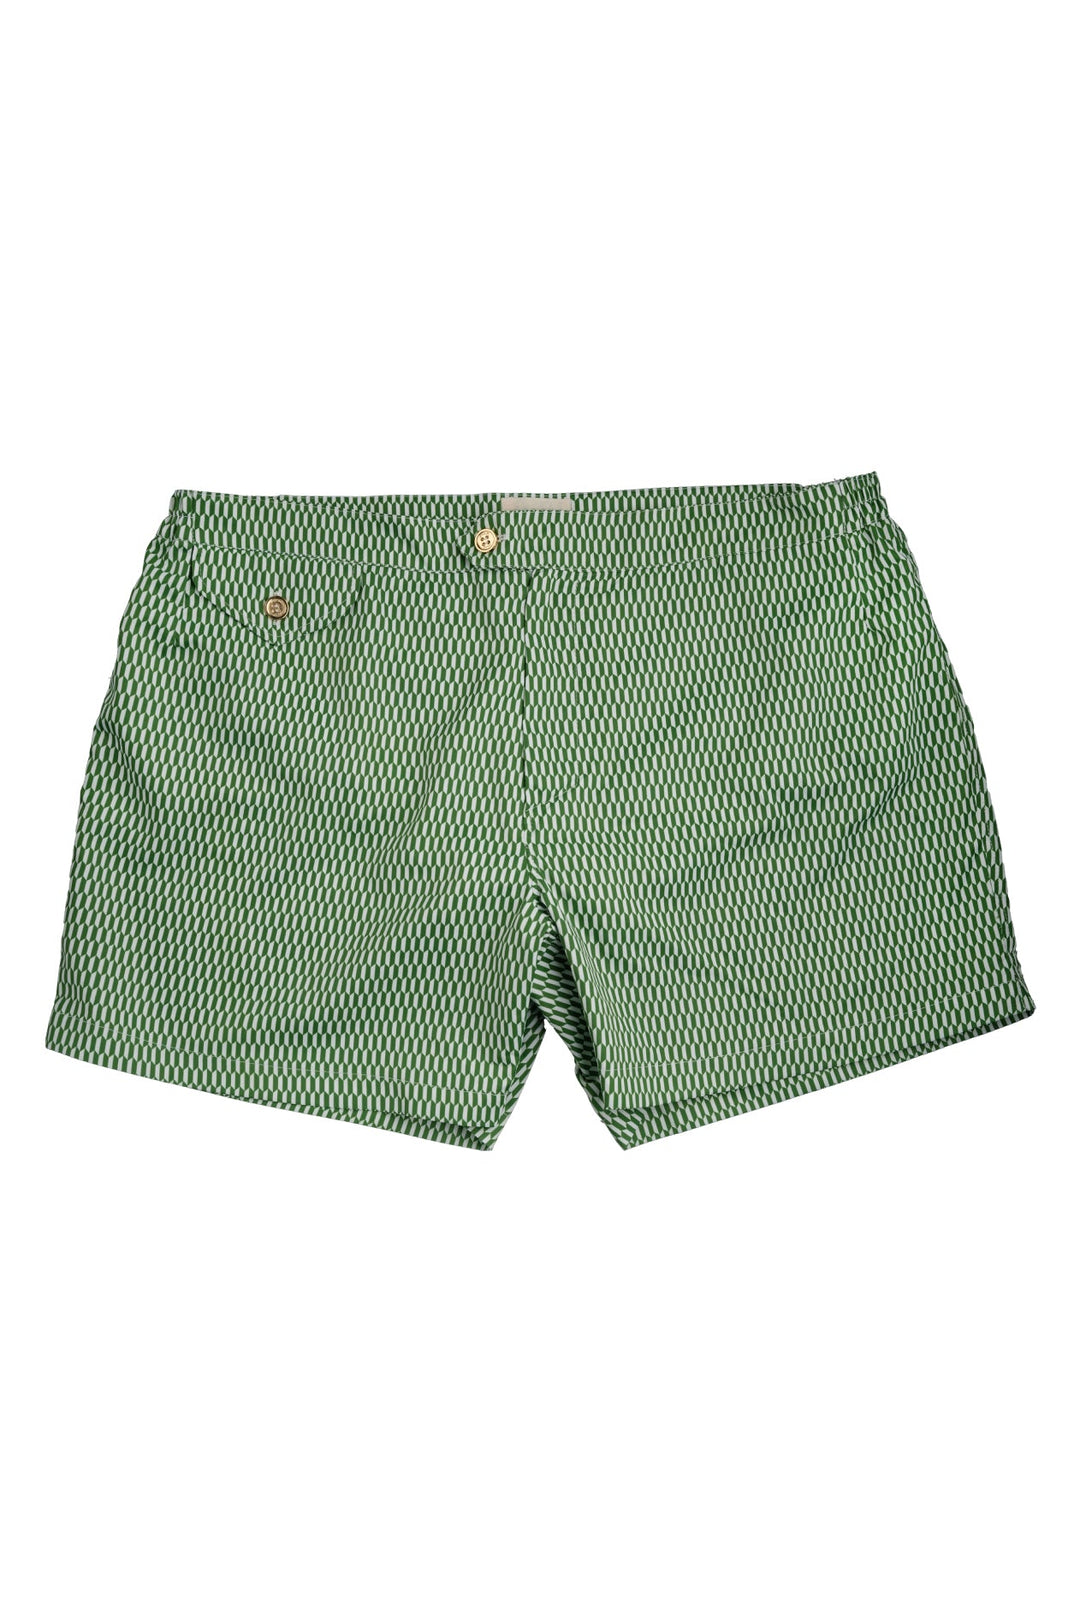 Green patterned men's swim shorts on a plain white background